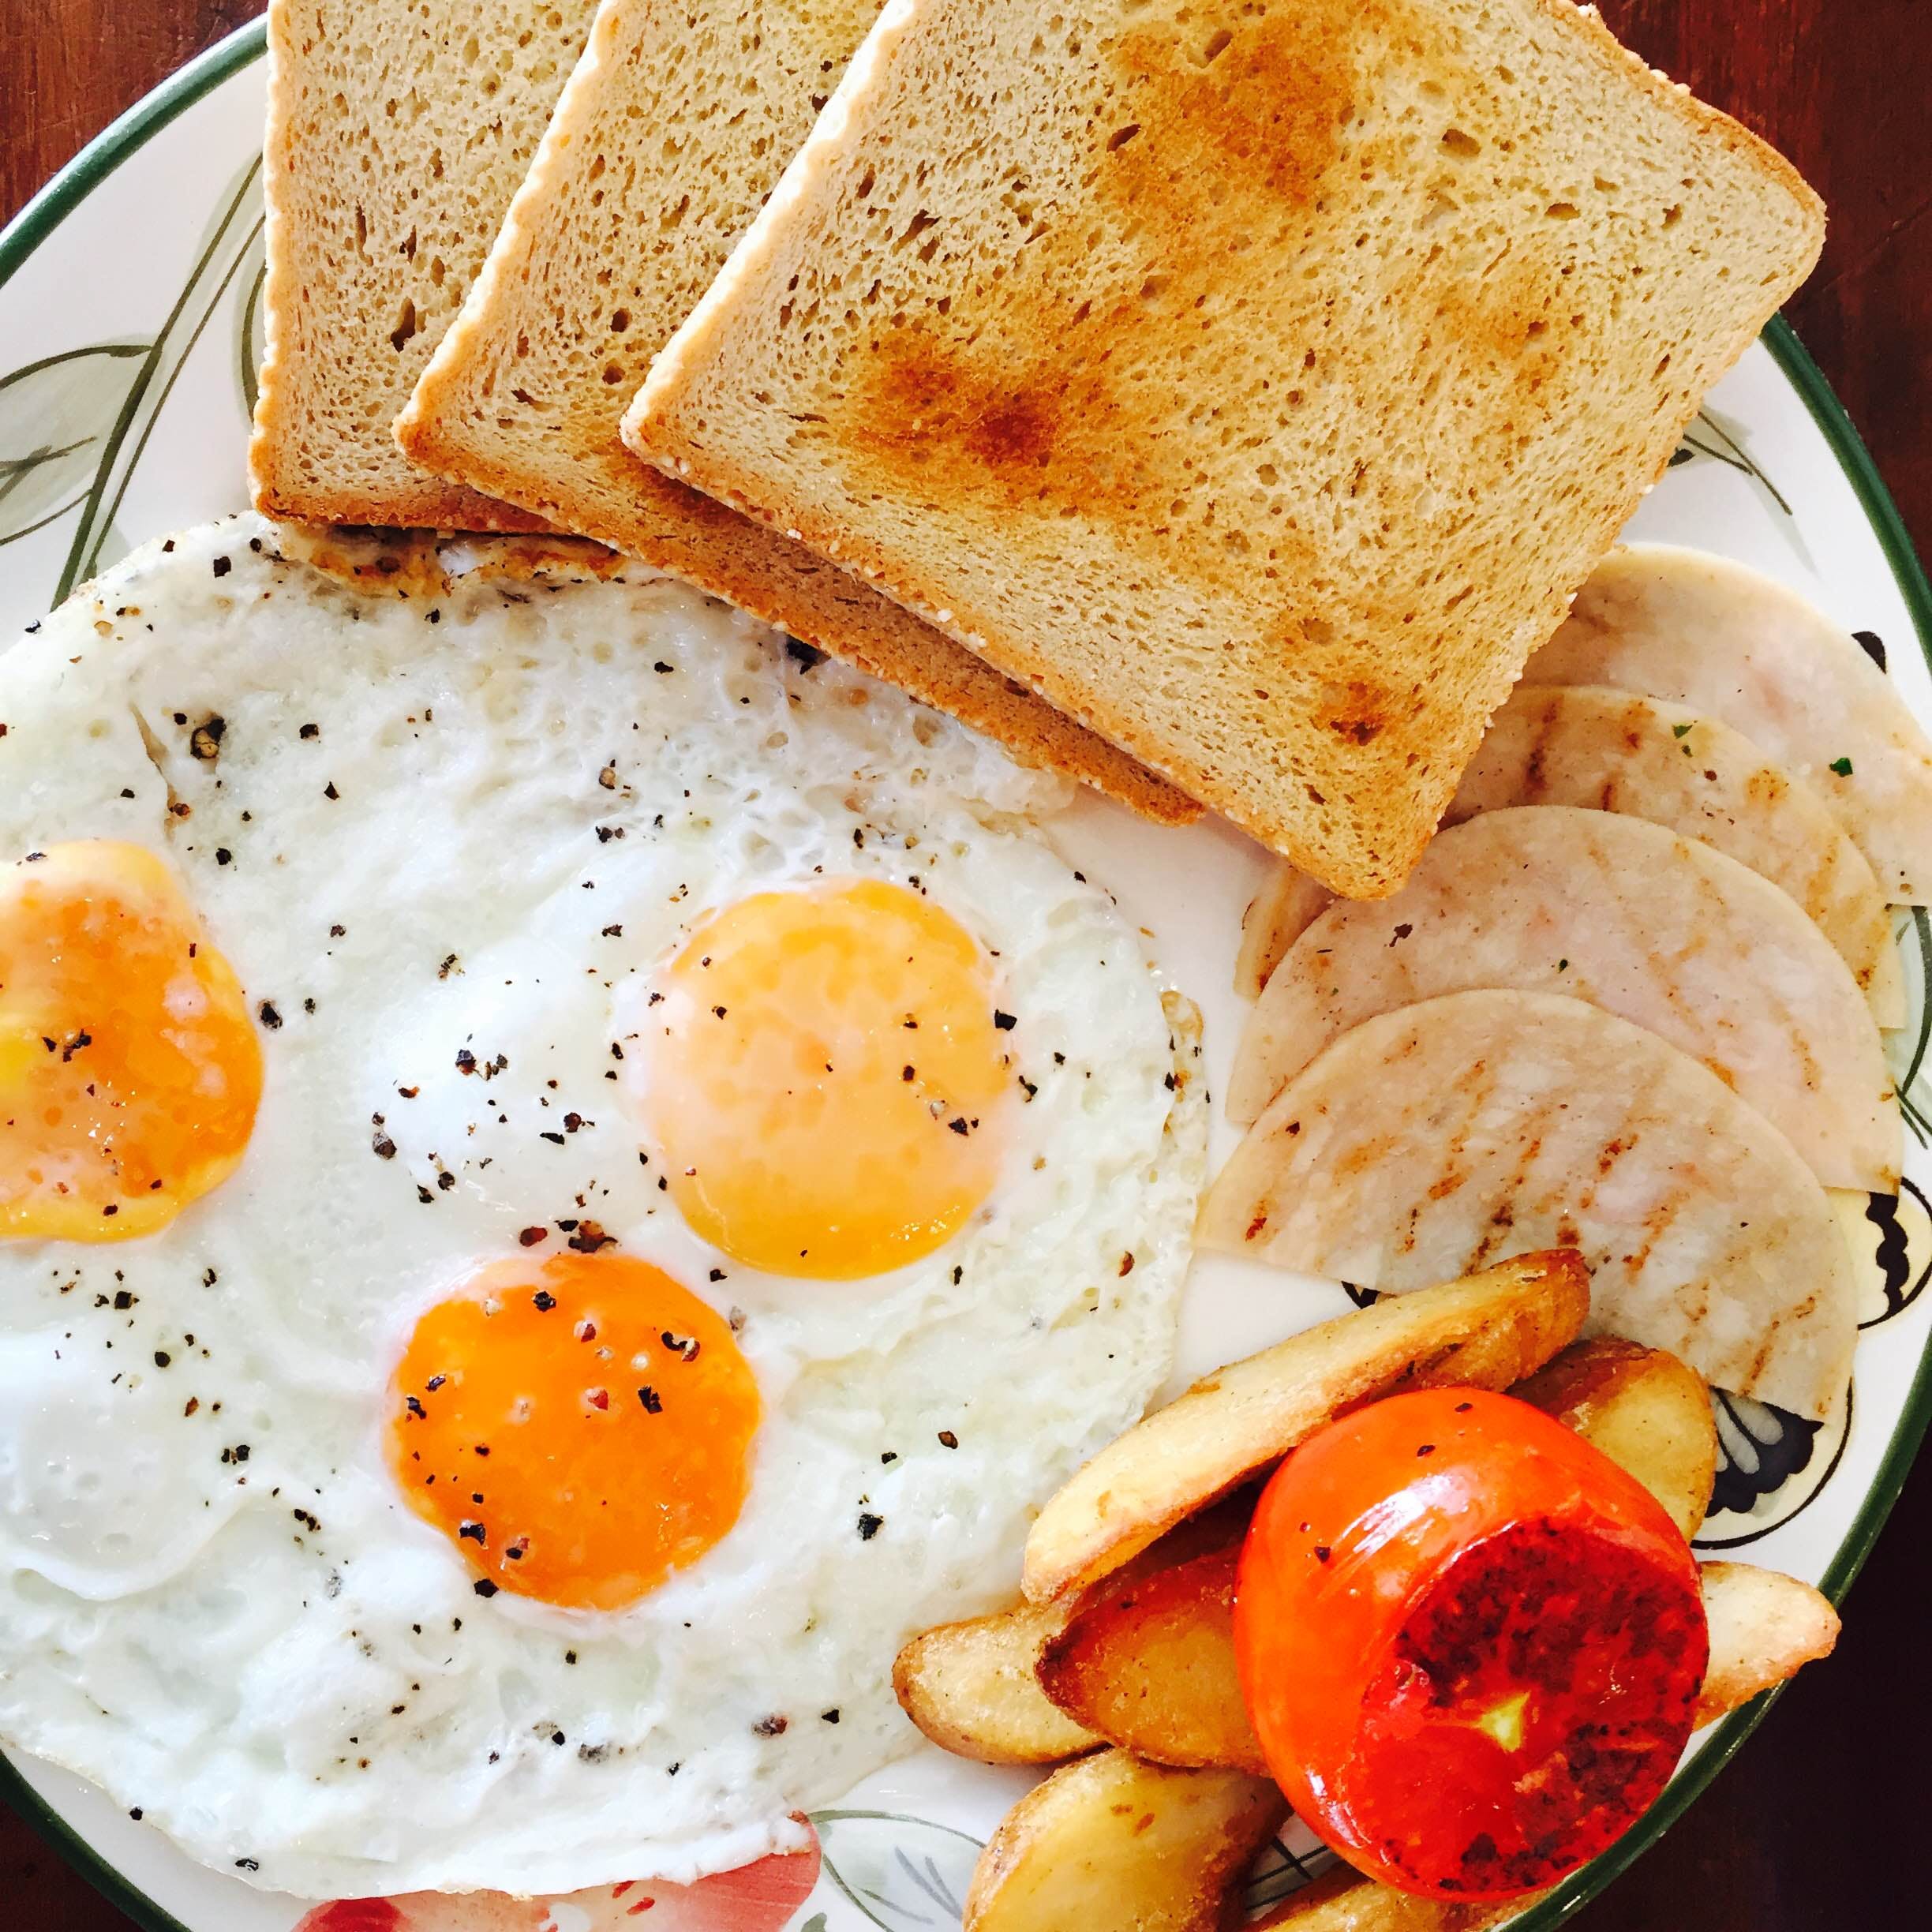 Dish,Food,Fried egg,Cuisine,Ingredient,Breakfast,Egg,Meal,Comfort food,Full breakfast